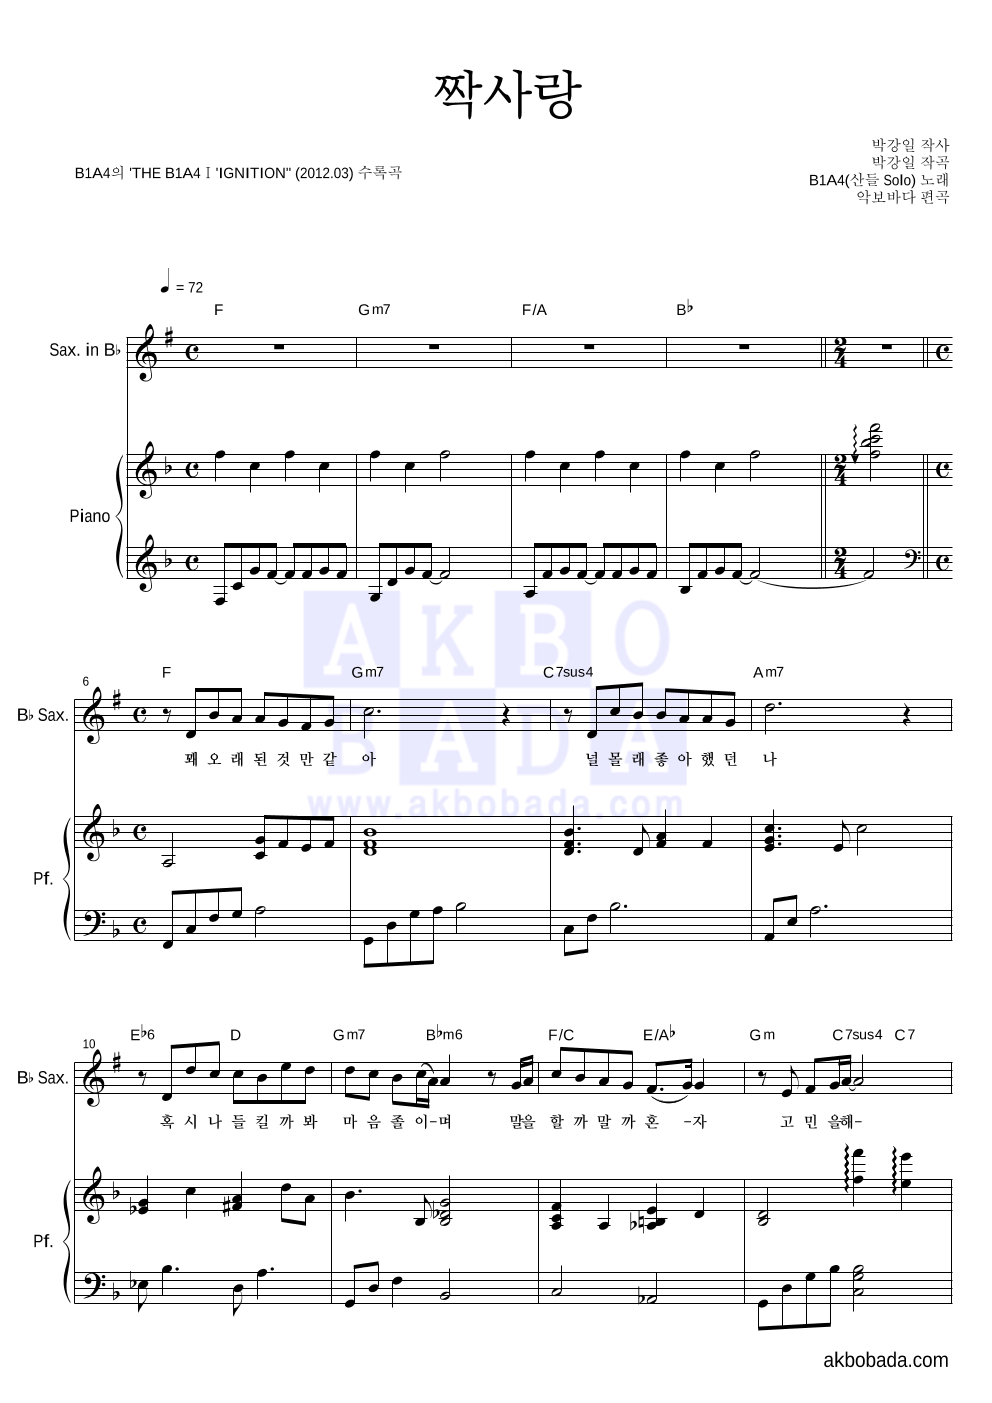 B1A4 - 짝사랑 (산들 Solo) Bb색소폰&피아노 악보 